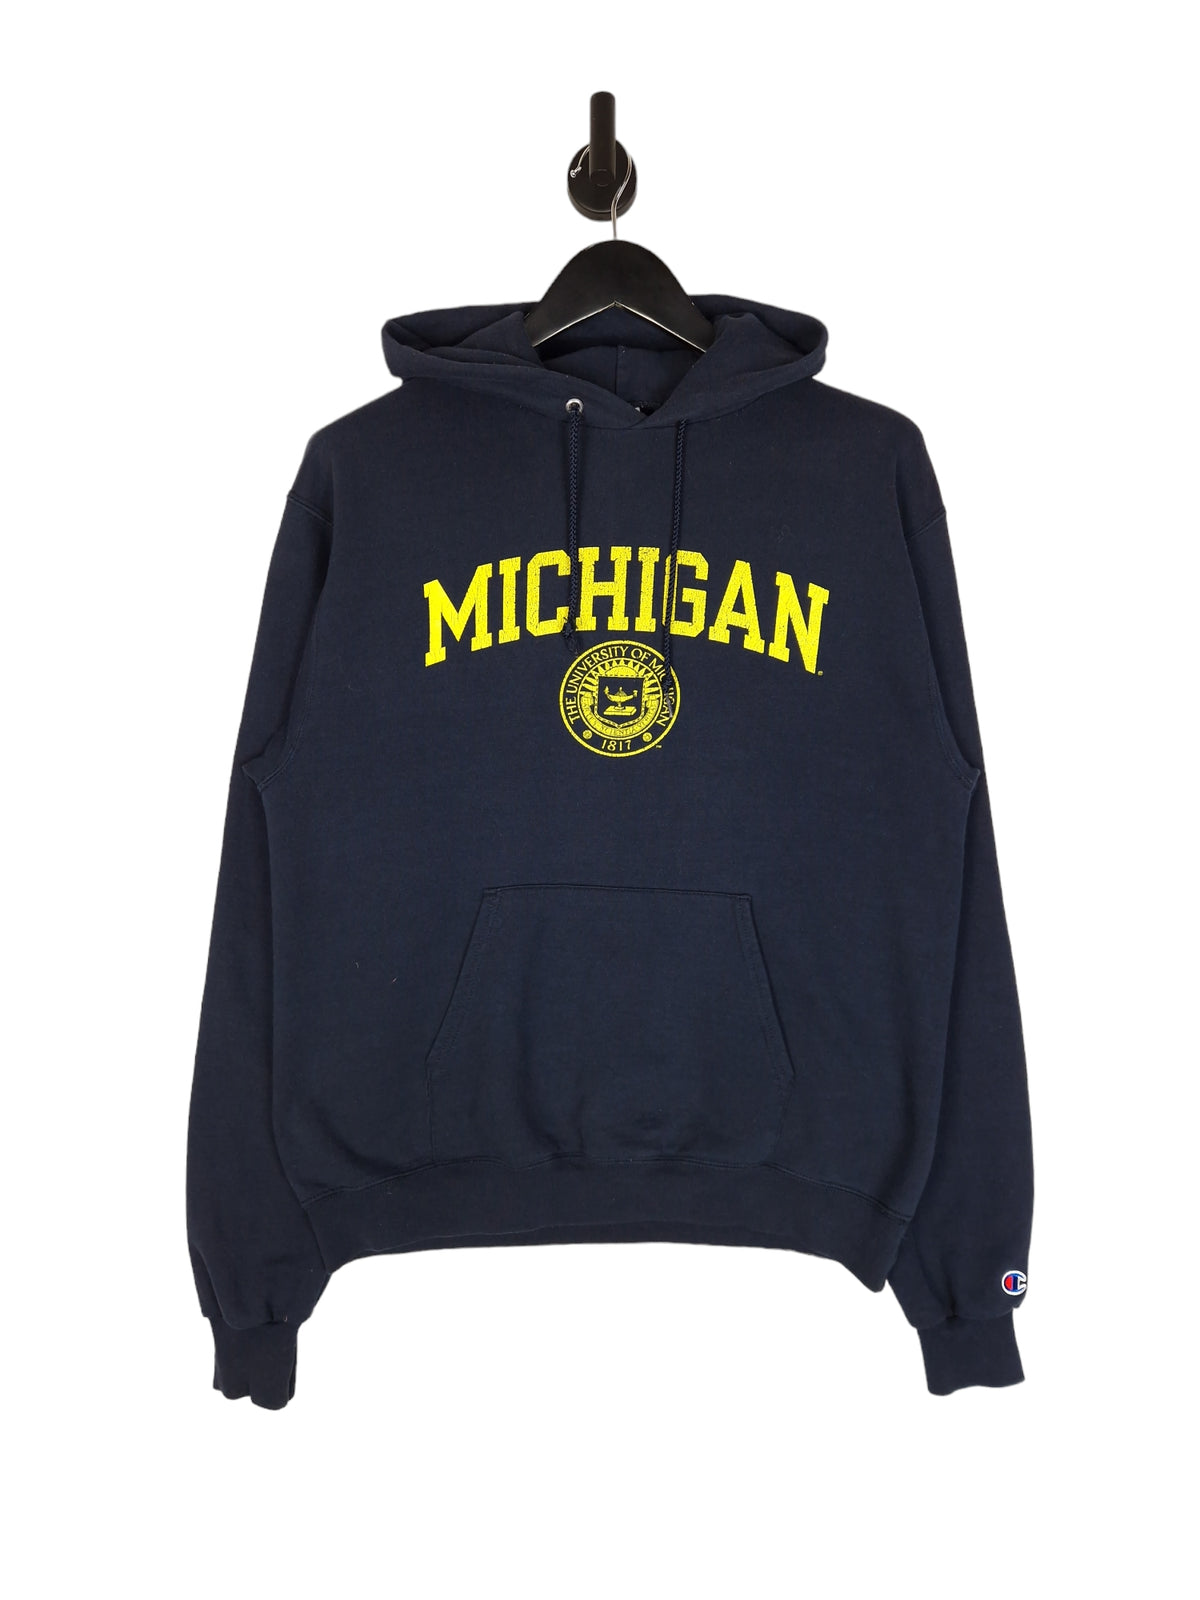 Champion Michigan College Hoodie - Size Medium